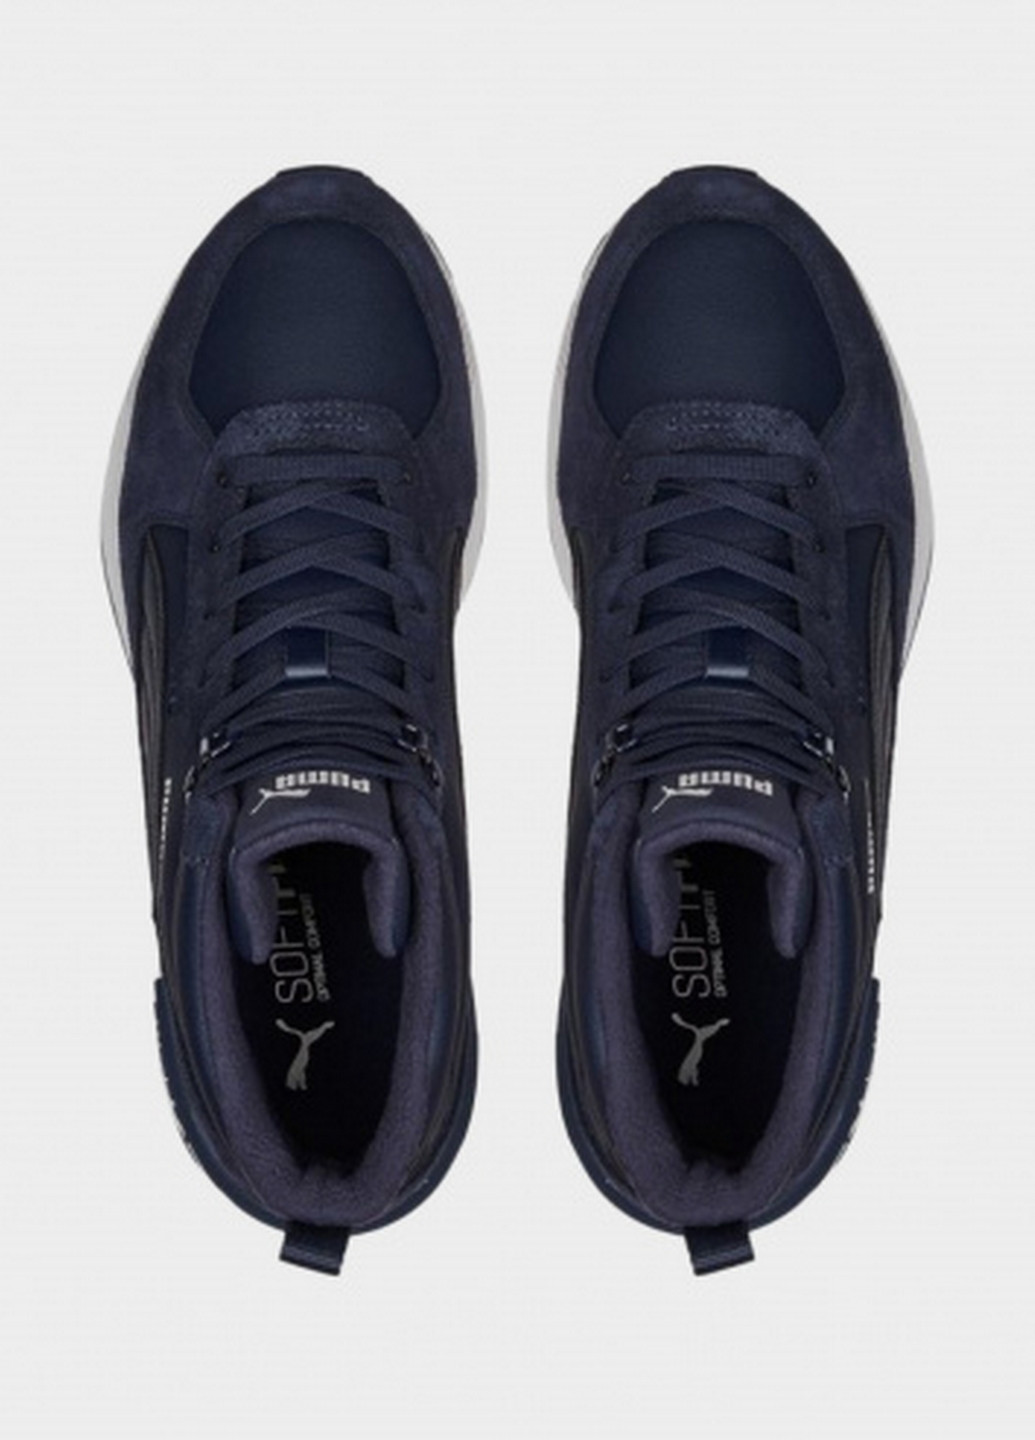 Темно-синие демисезонные мужские кроссовки Puma Graviton Mid